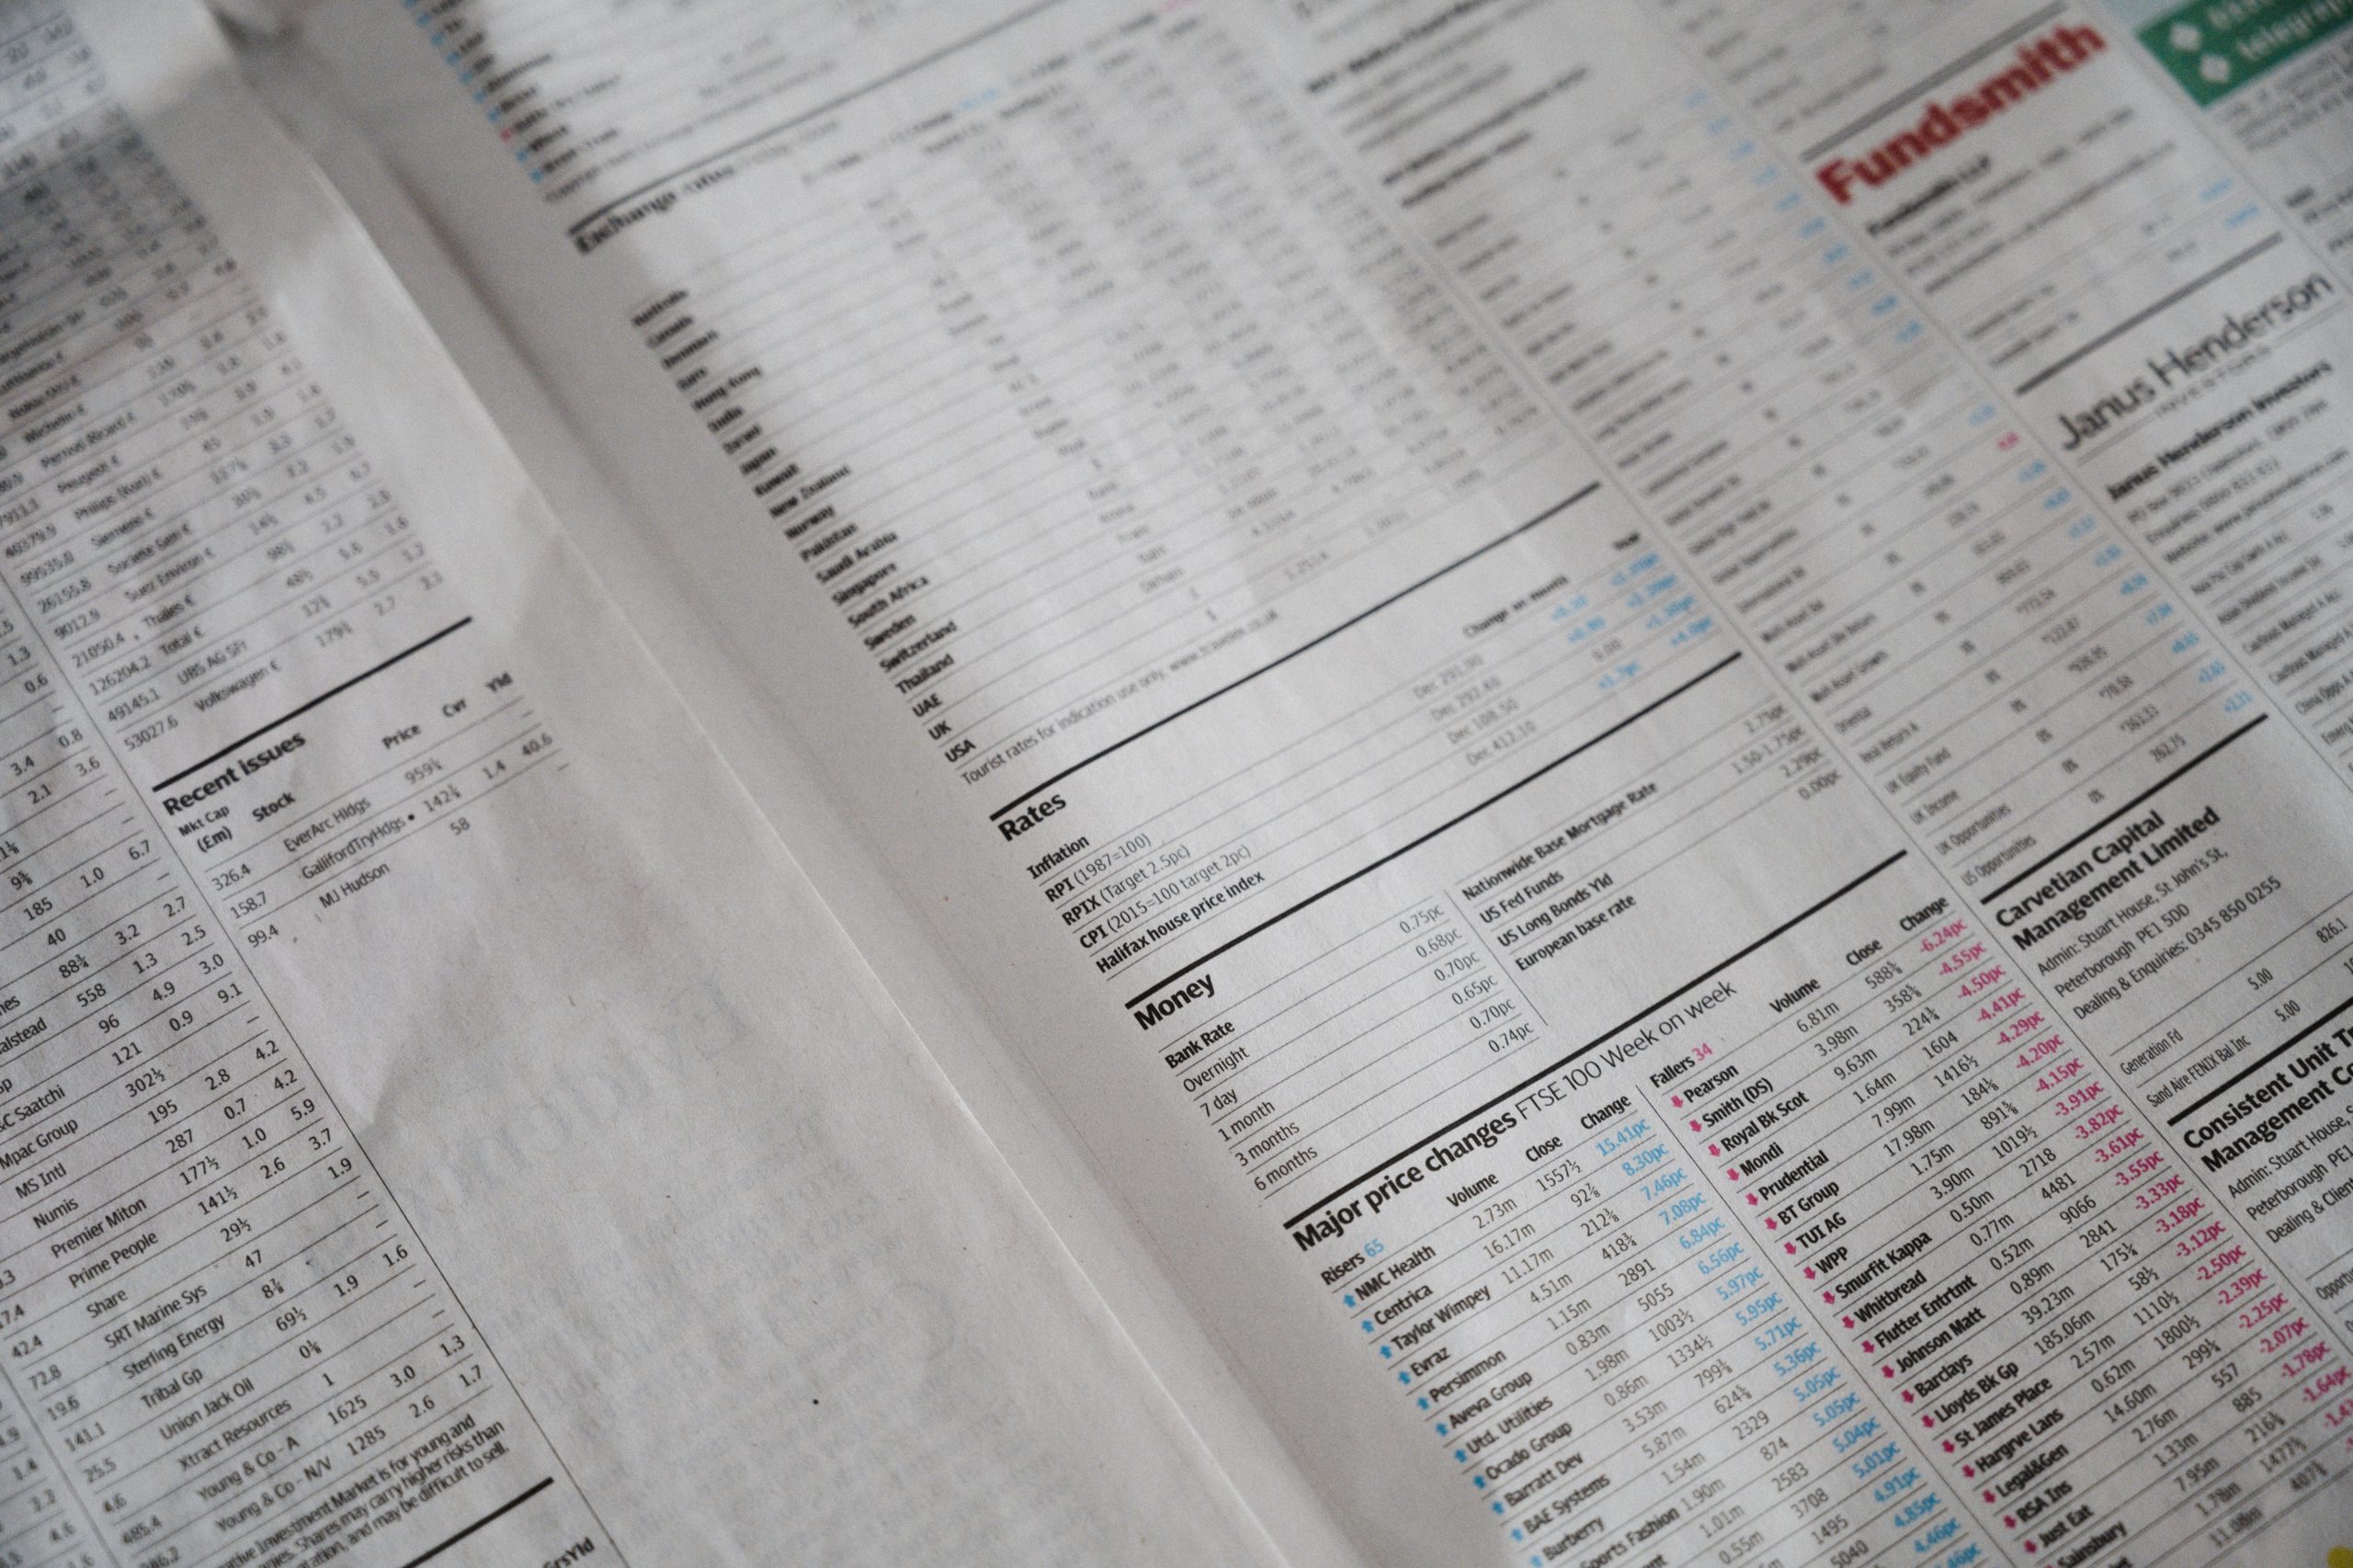 Market data in financial newspaper